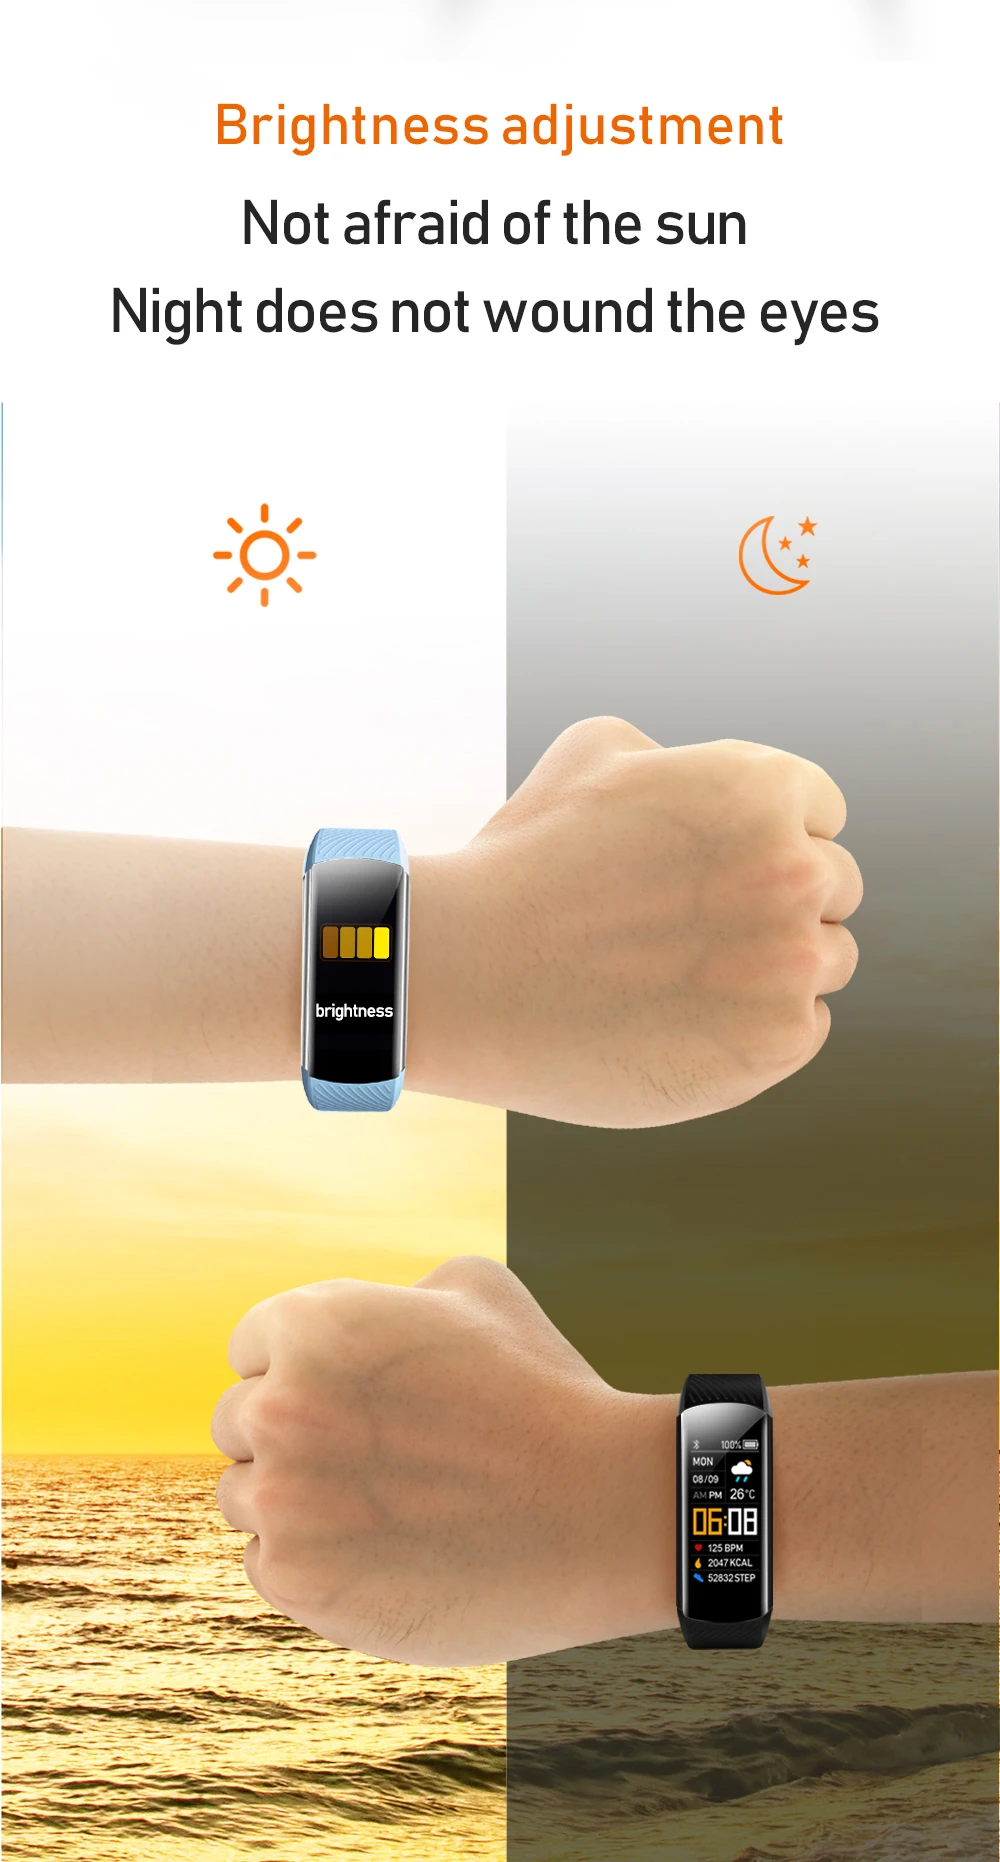 2021 Smart Watch Men Women Sport Smartwatch Fitness Tracker Watch For Android iOS Heart Rate Monitor Electronic Clock Waterproof